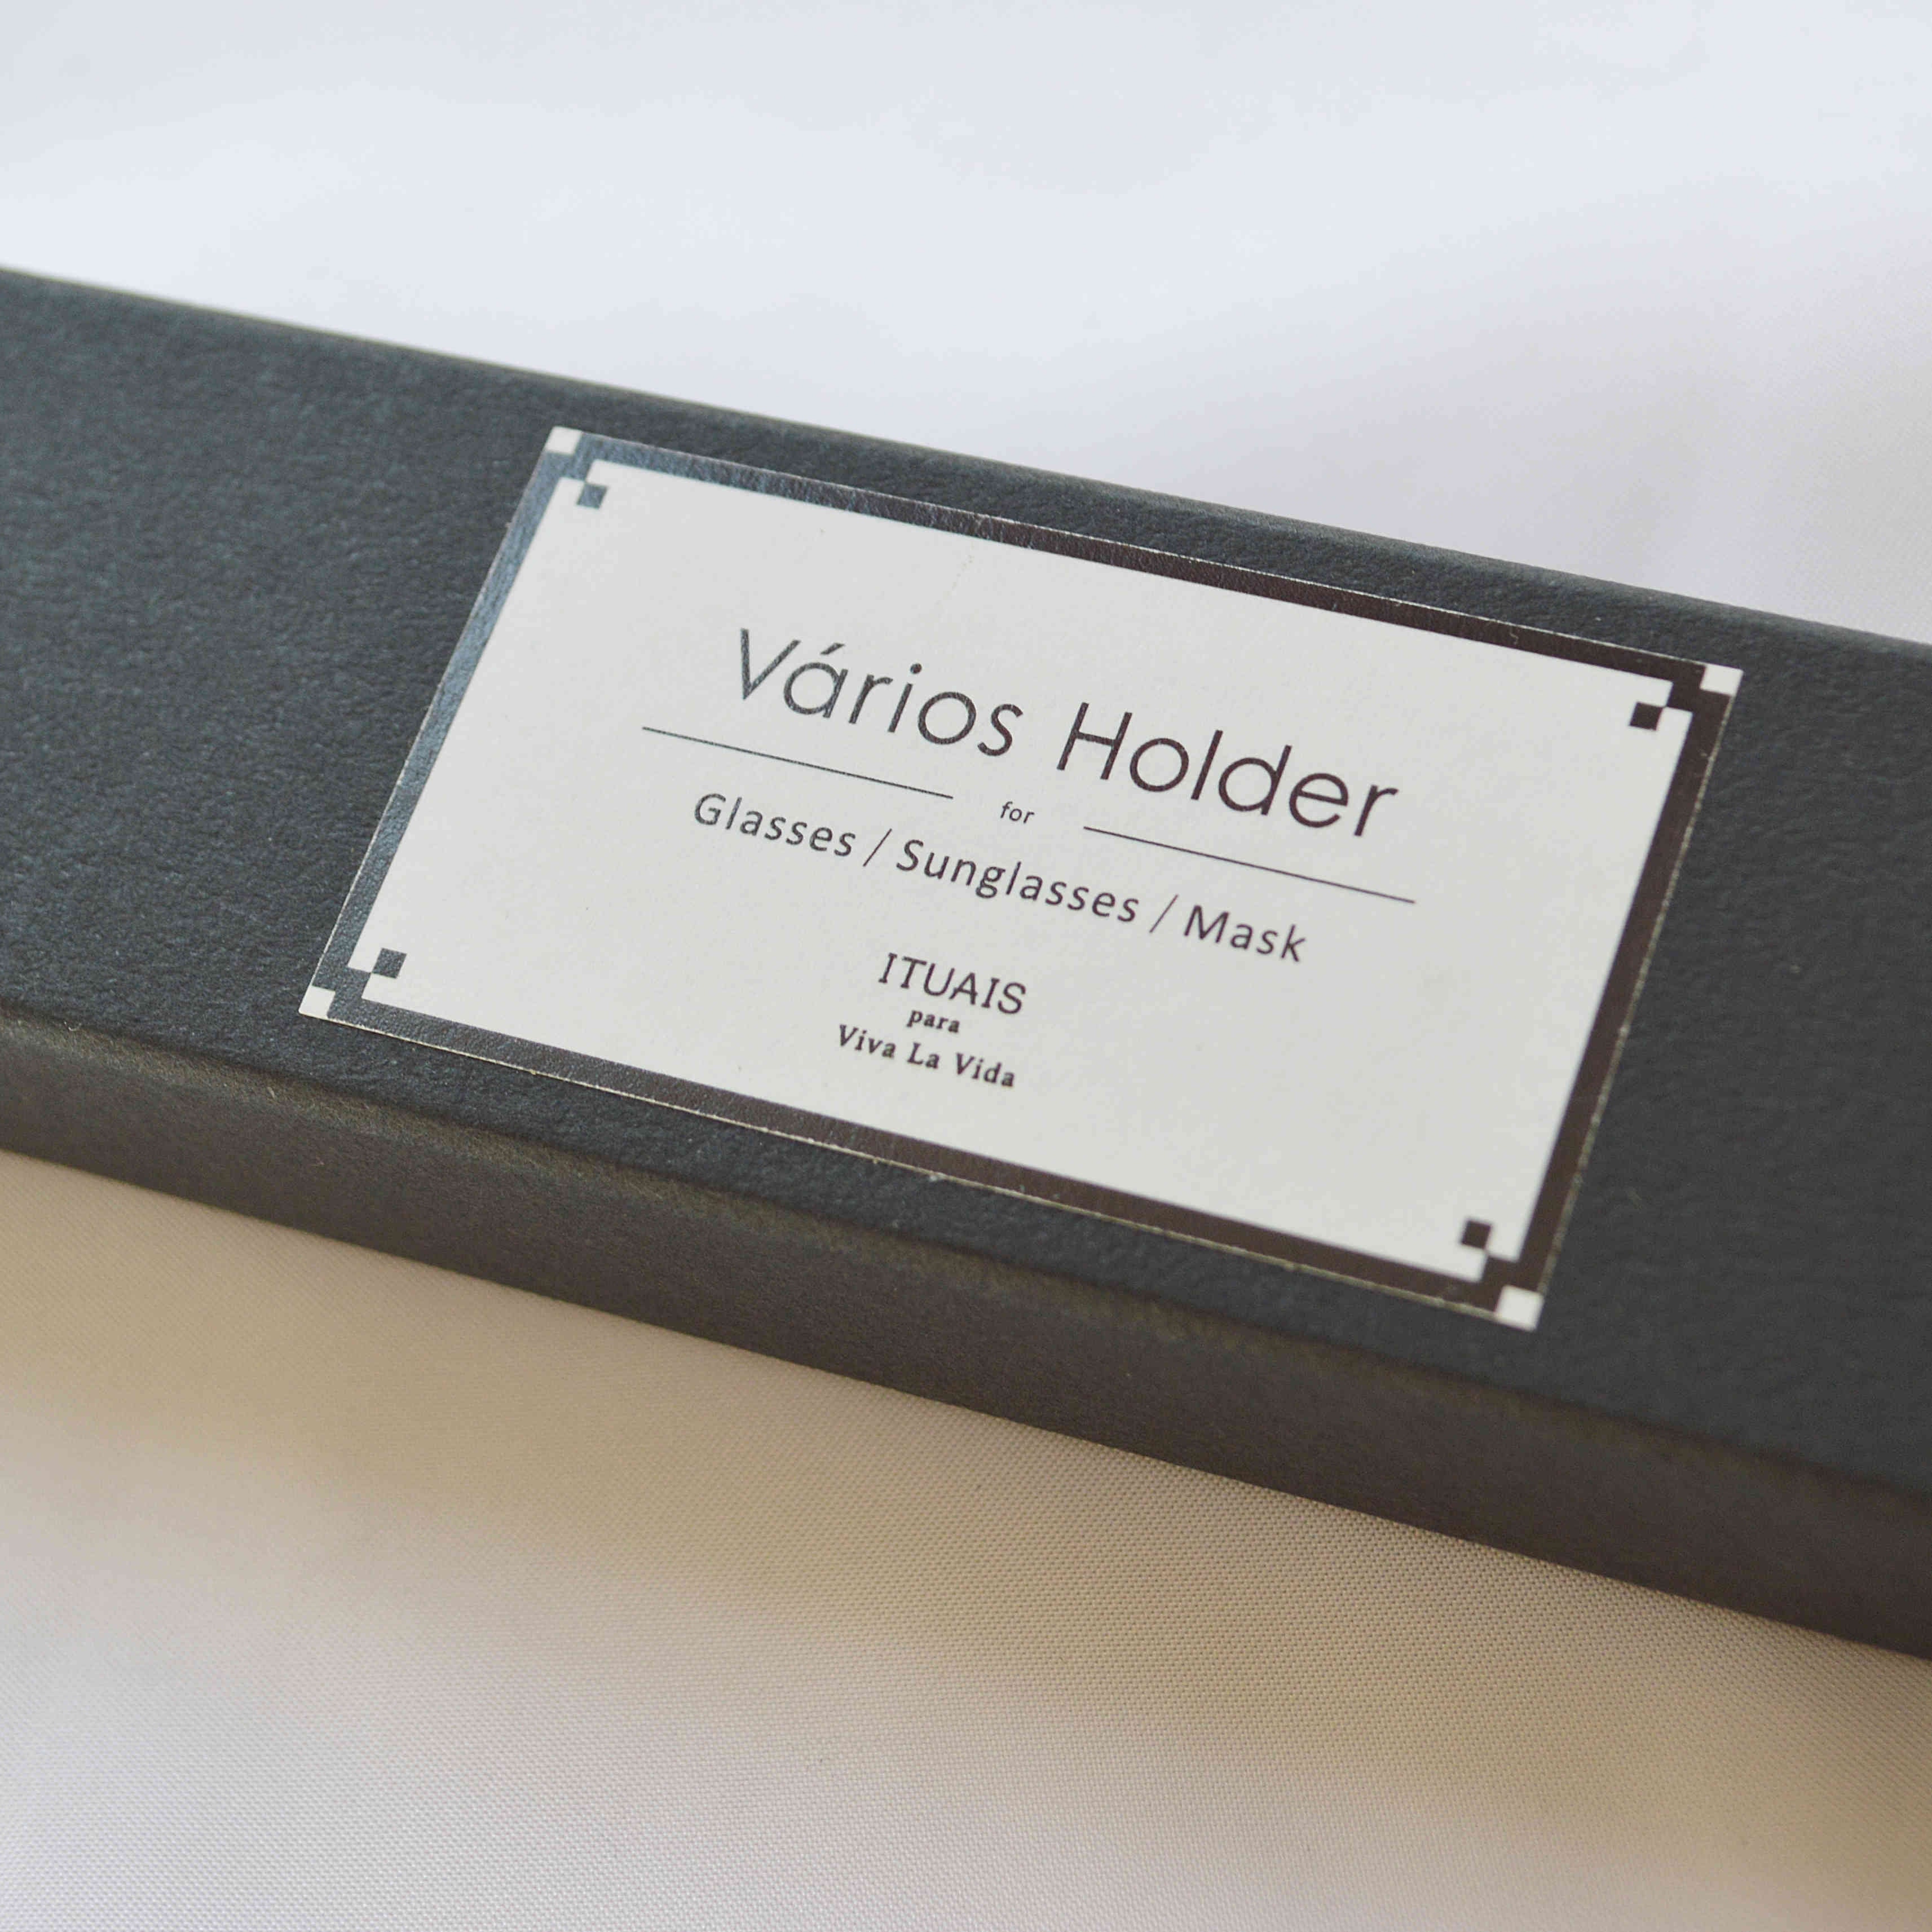 ITUAIS イトゥアイス / VARIOS HORDER バリオスホルダー (Vintage Venetian Beads ヴィンテージベネチアンビーズ)